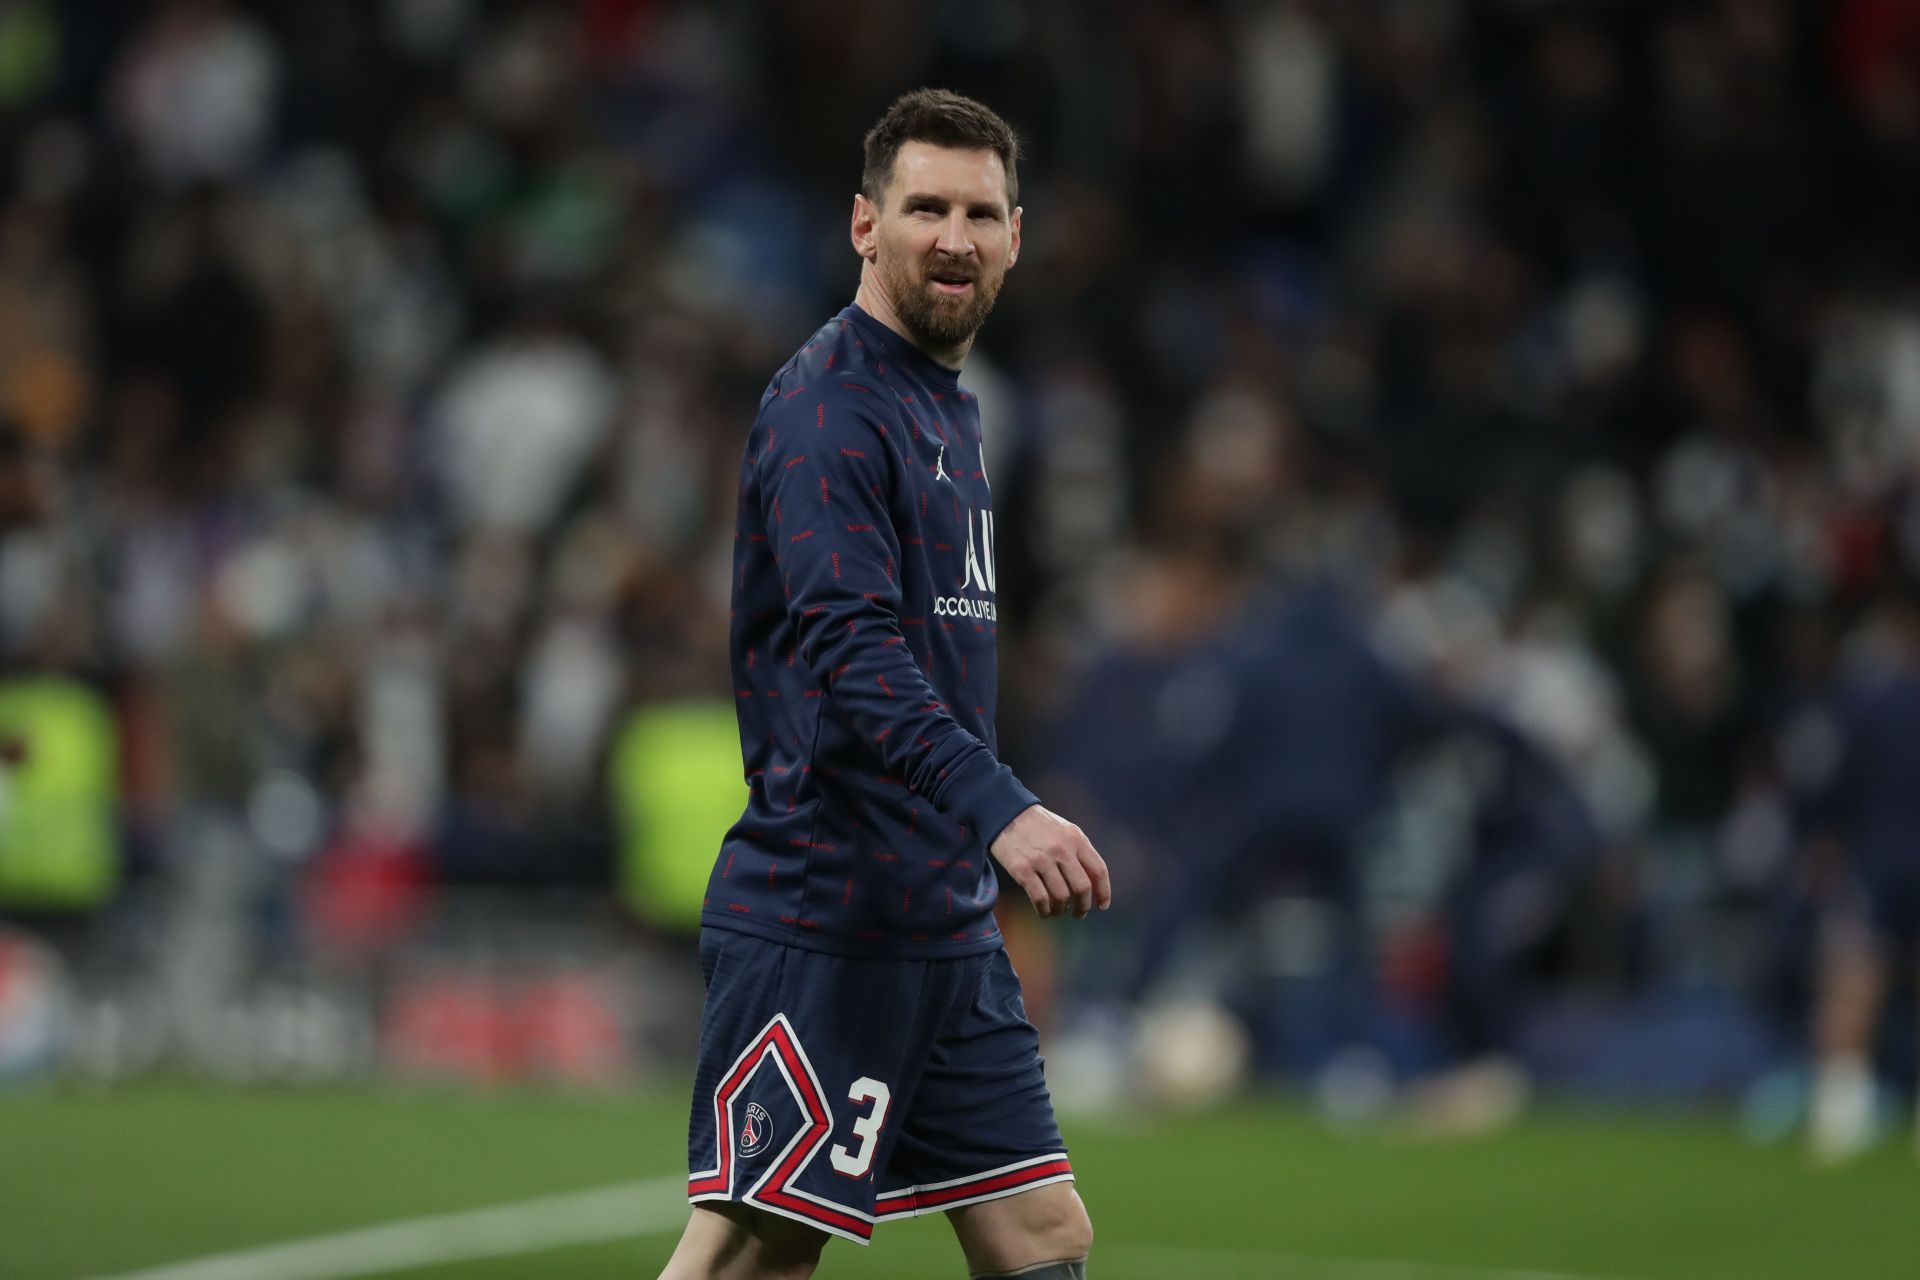 Lionel Messi has endured a difficult season so far at the Parc des Princes.